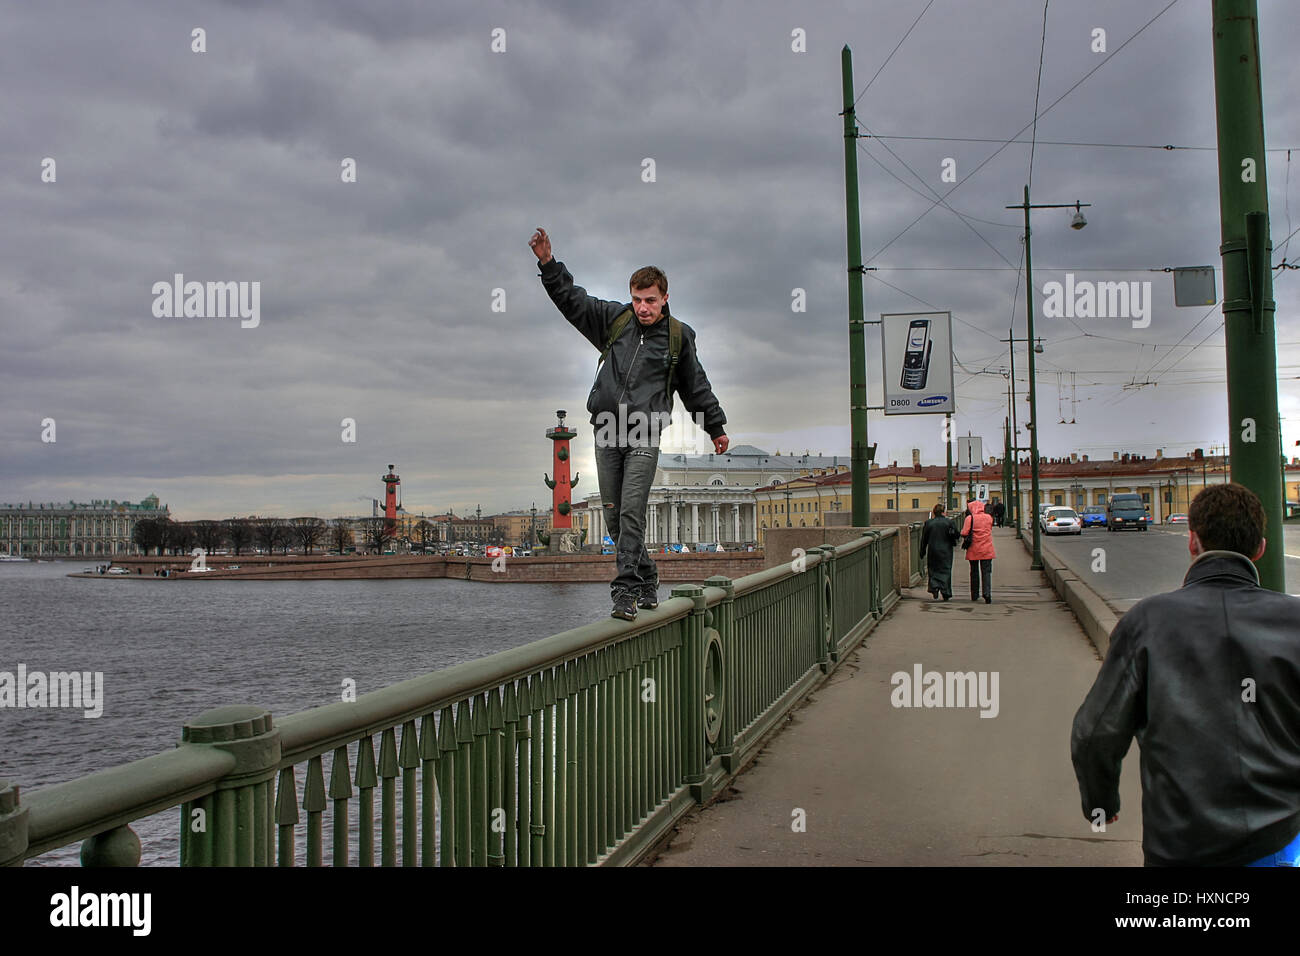 St. Petersburg, Russia - April 22, 2006: Unidentified man risked his life to pass on parapet, Birzhevoy bridge. Stock Photo